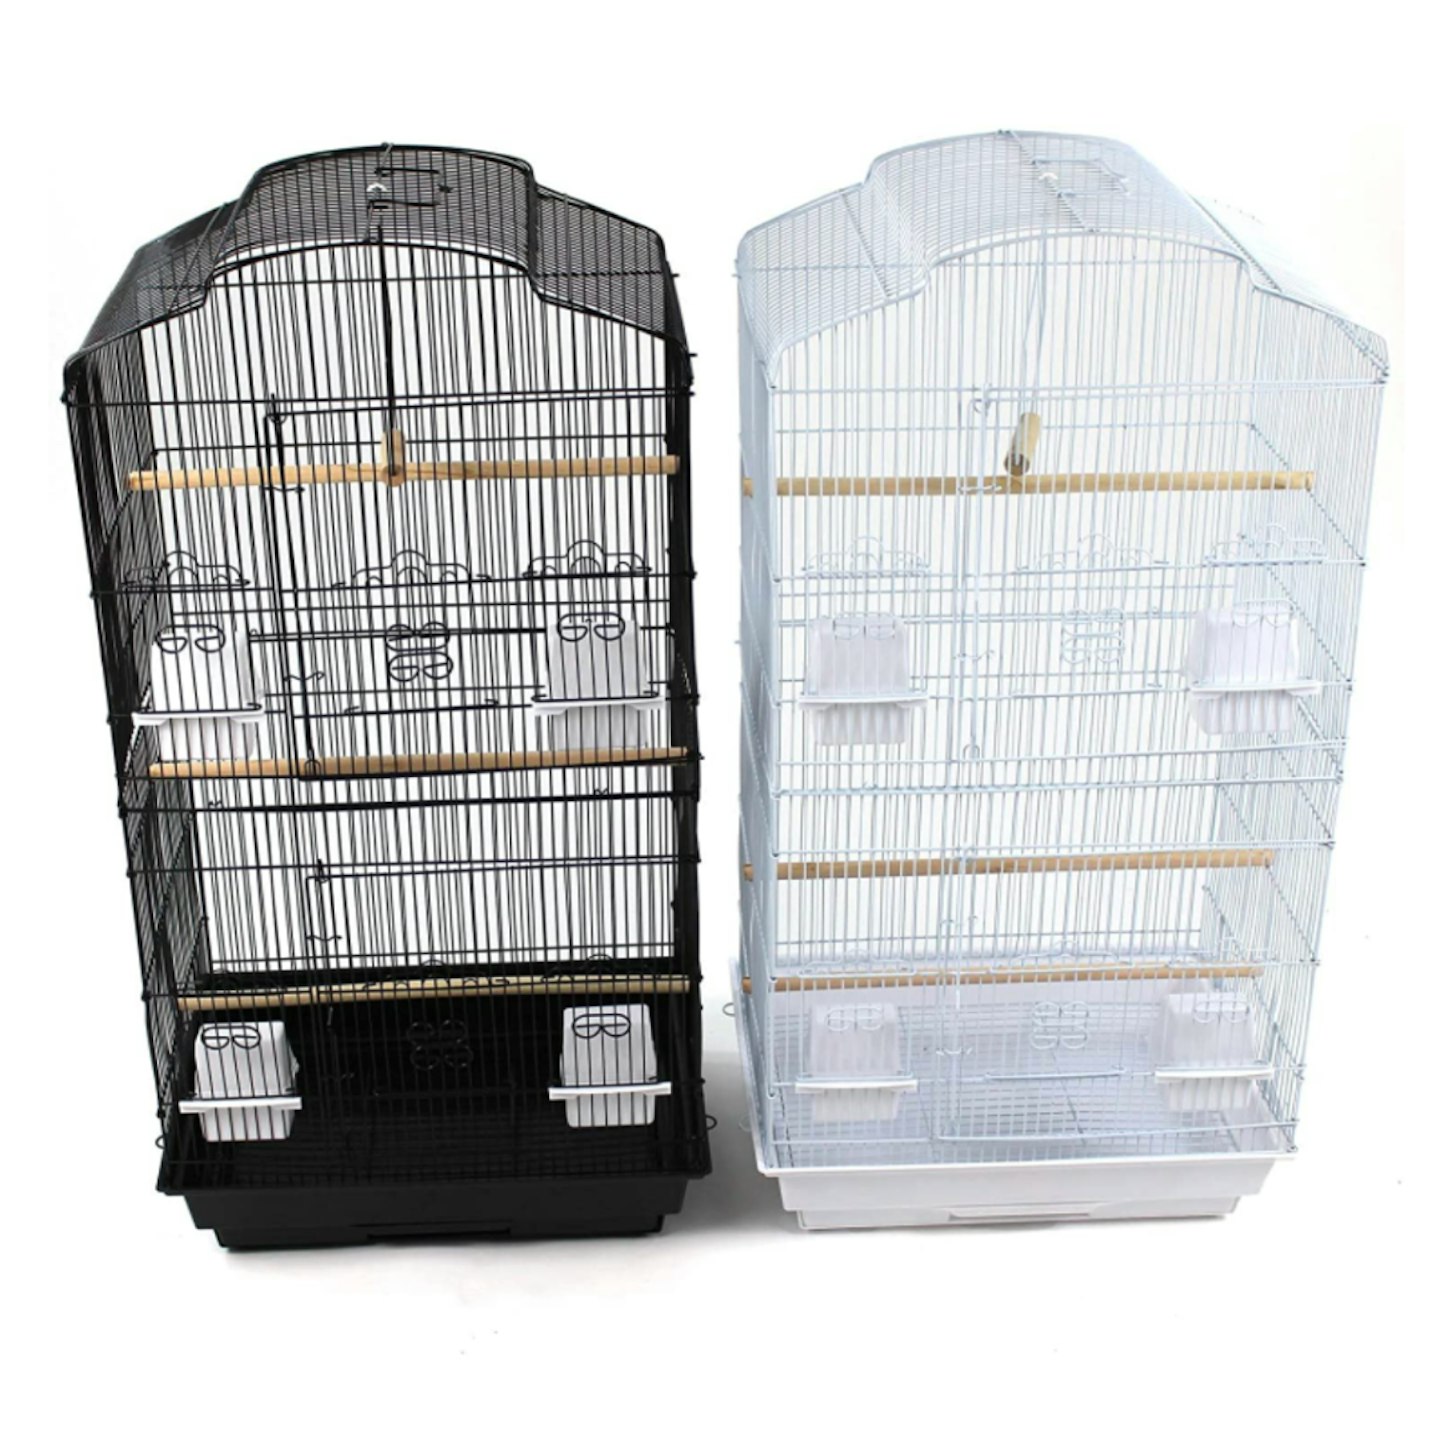 Easipet Large Metal Bird Cage for Budgie, Cockatiel, Lovebirds etc.